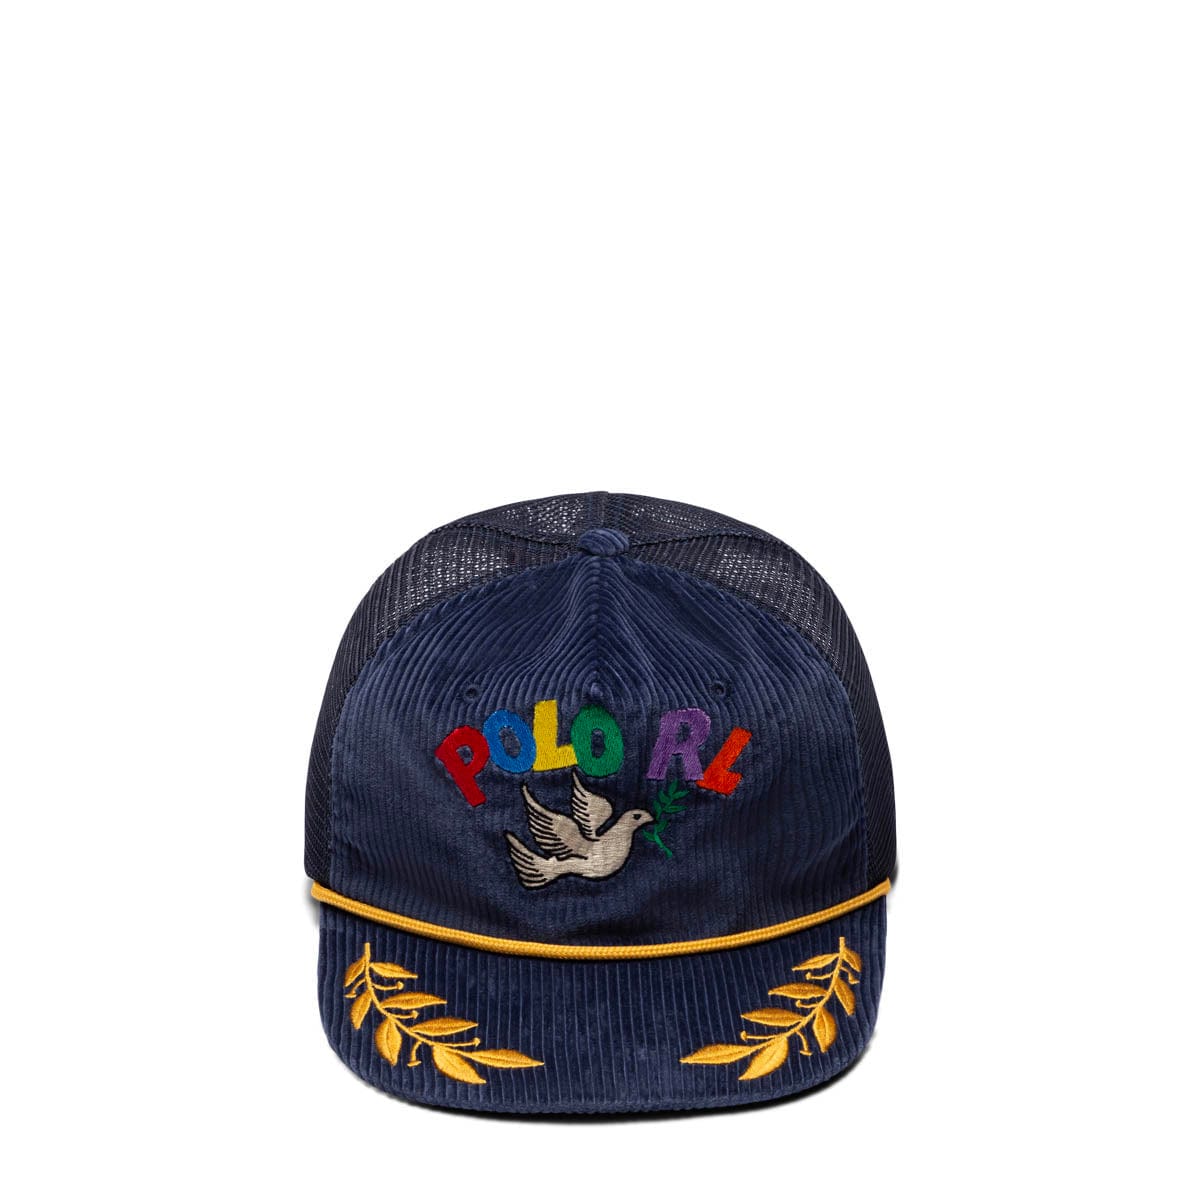 Mens Women Adjustable Baseball Cap Unisex Vintage Hat Polo Style Caps LA  Hats